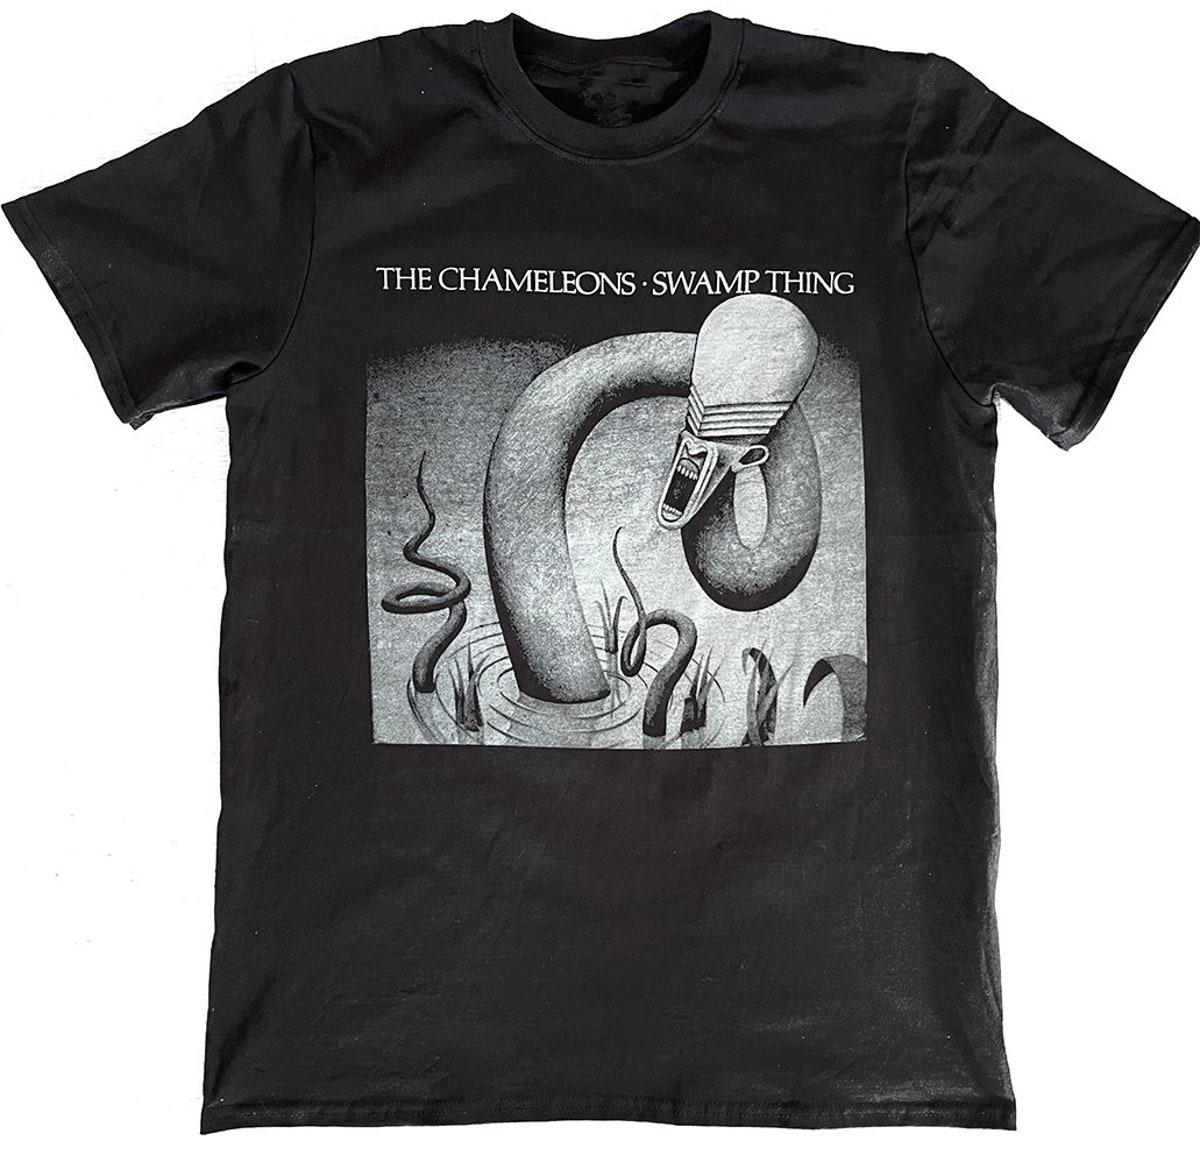 Vintage Bauhaus T-shirt Best Gifts For Post-punk Music Fans